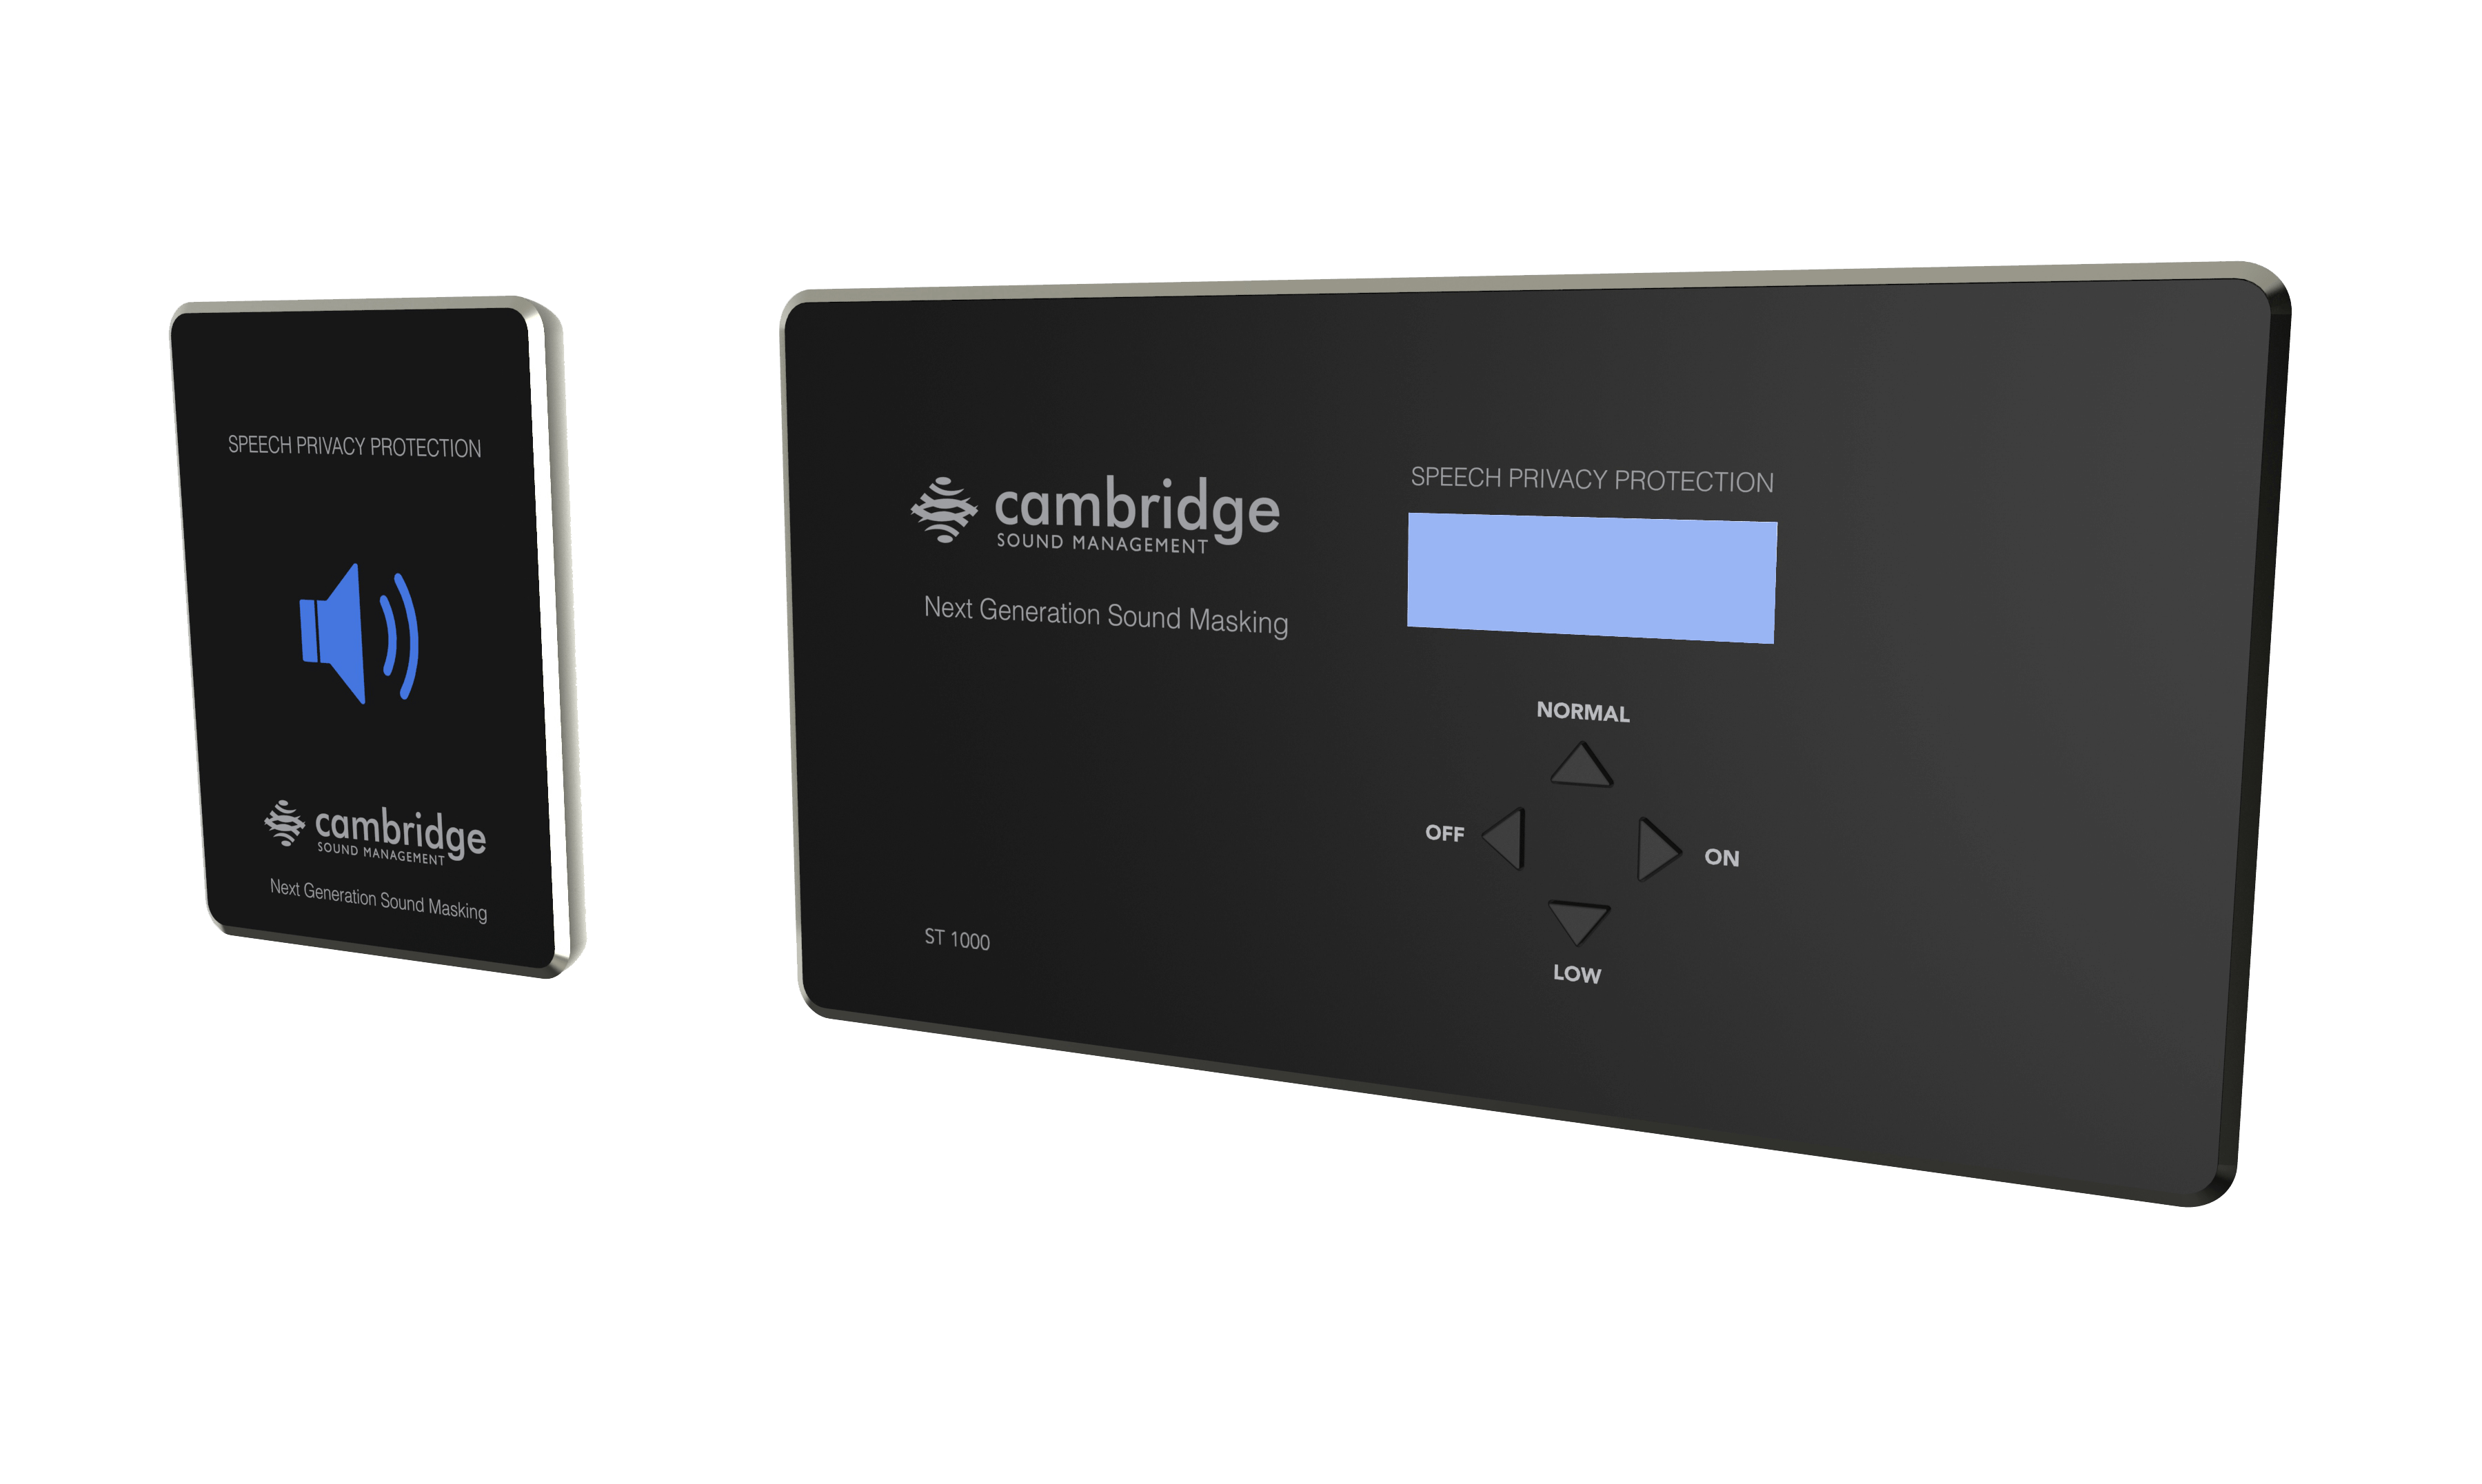 Biamp QT-CRE, Kit de enmascaramiento de ruido Cambridge Sound Management para salas de juntas